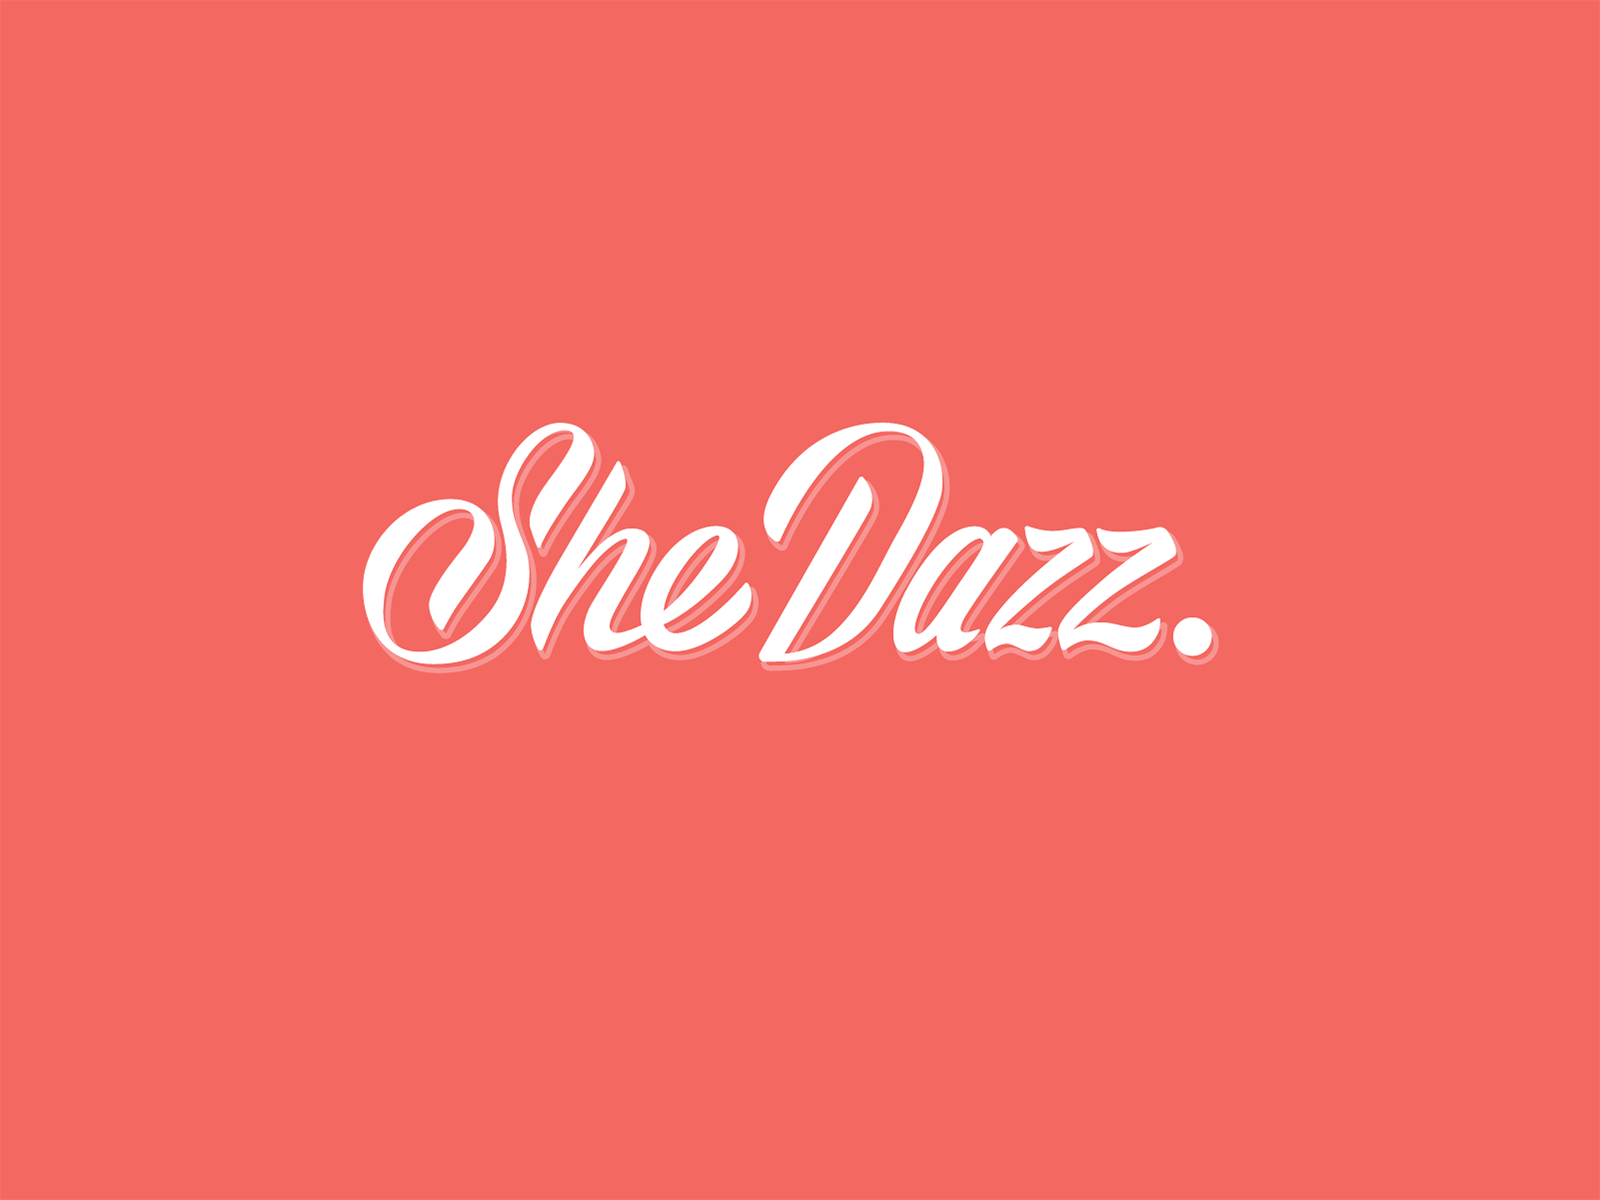 She Dazz